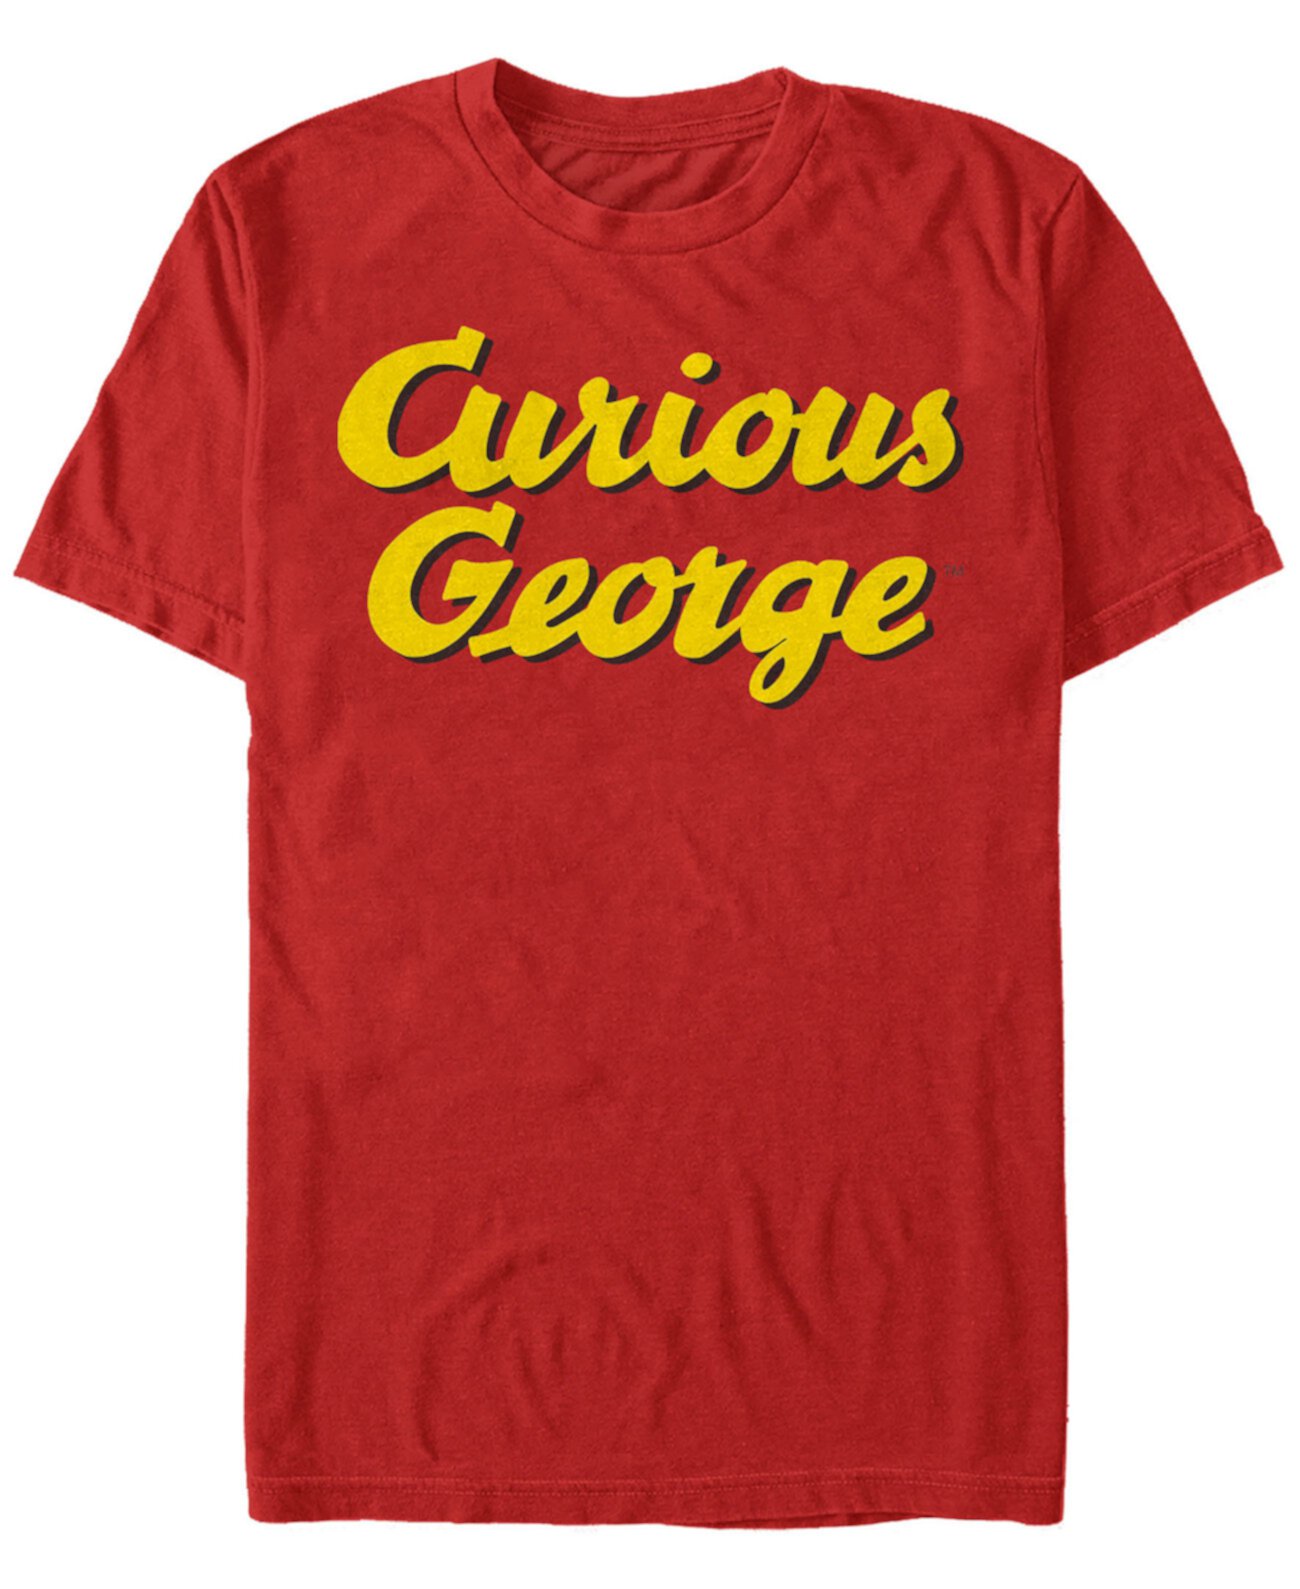 Мужская футболка с коротким рукавом с логотипом Curious George